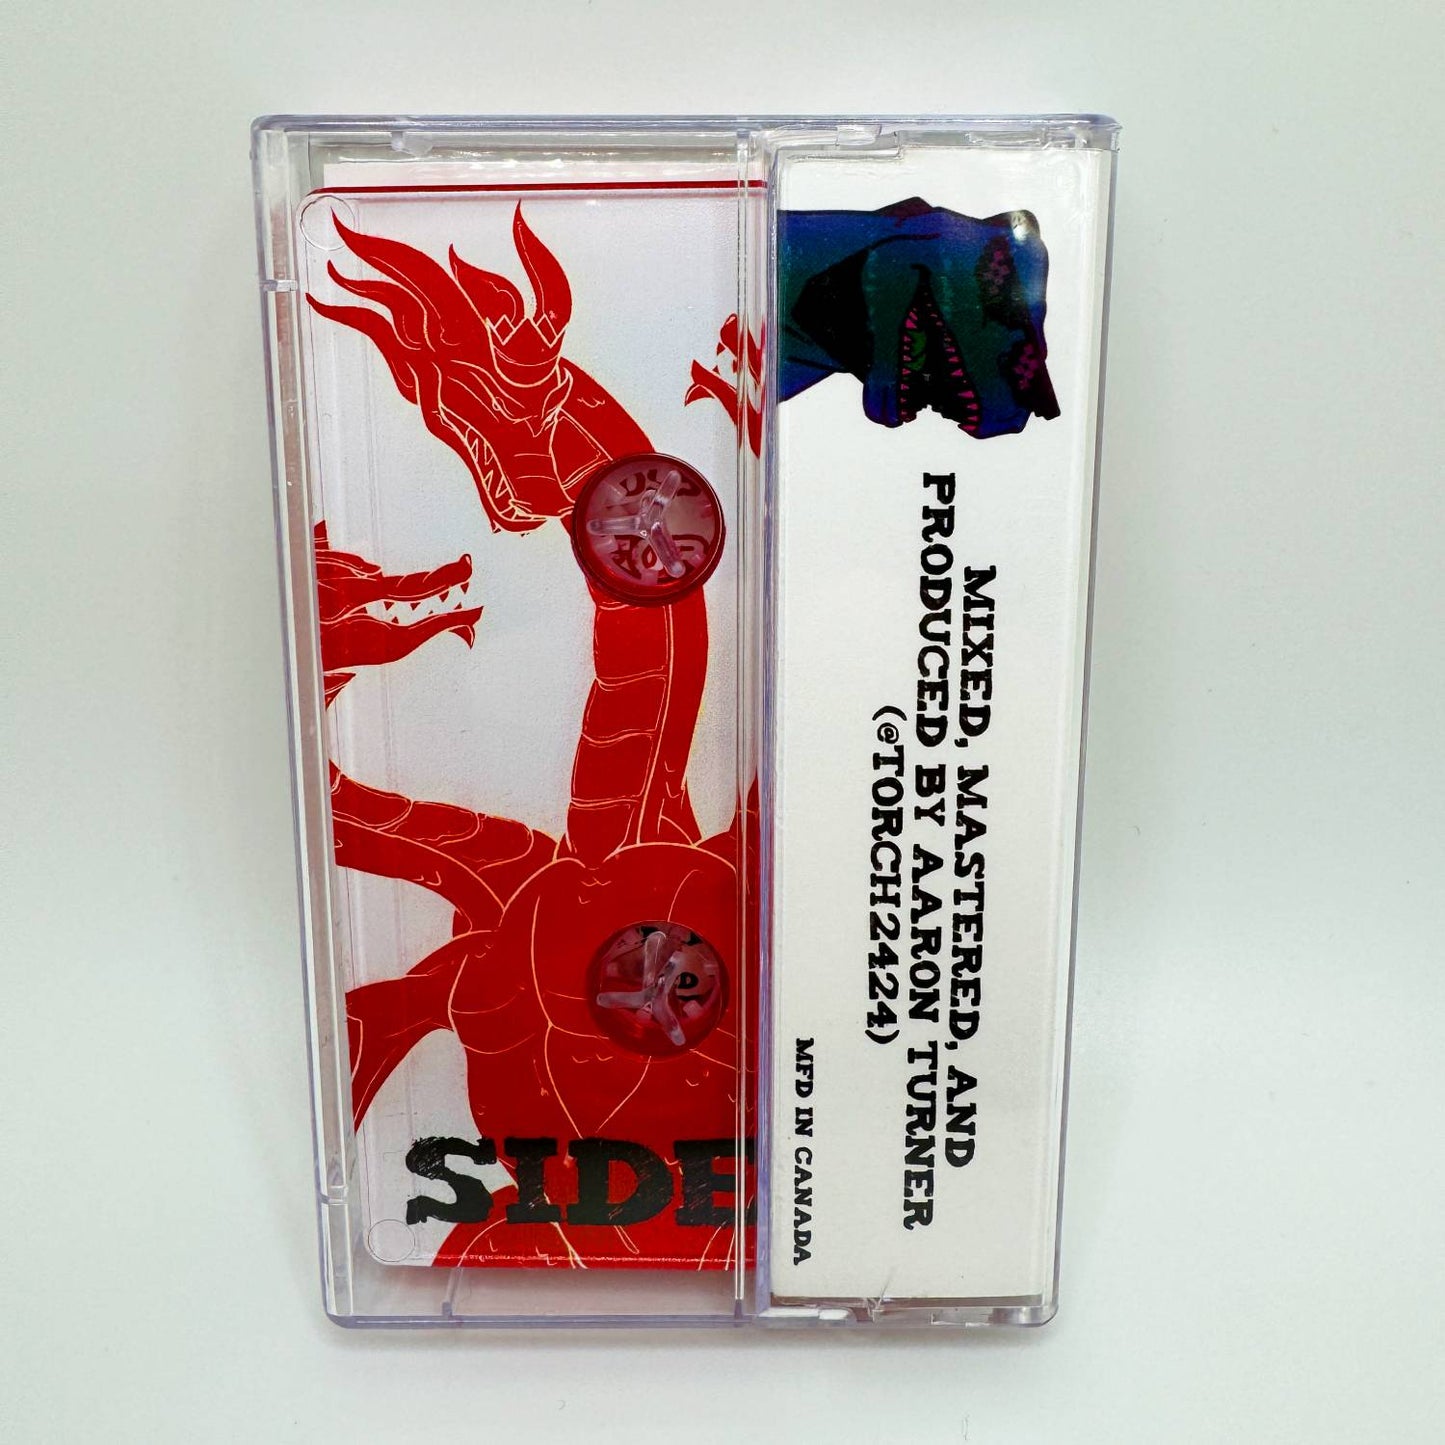 Groovy Kaiju - Monster Tape Zero (Album)